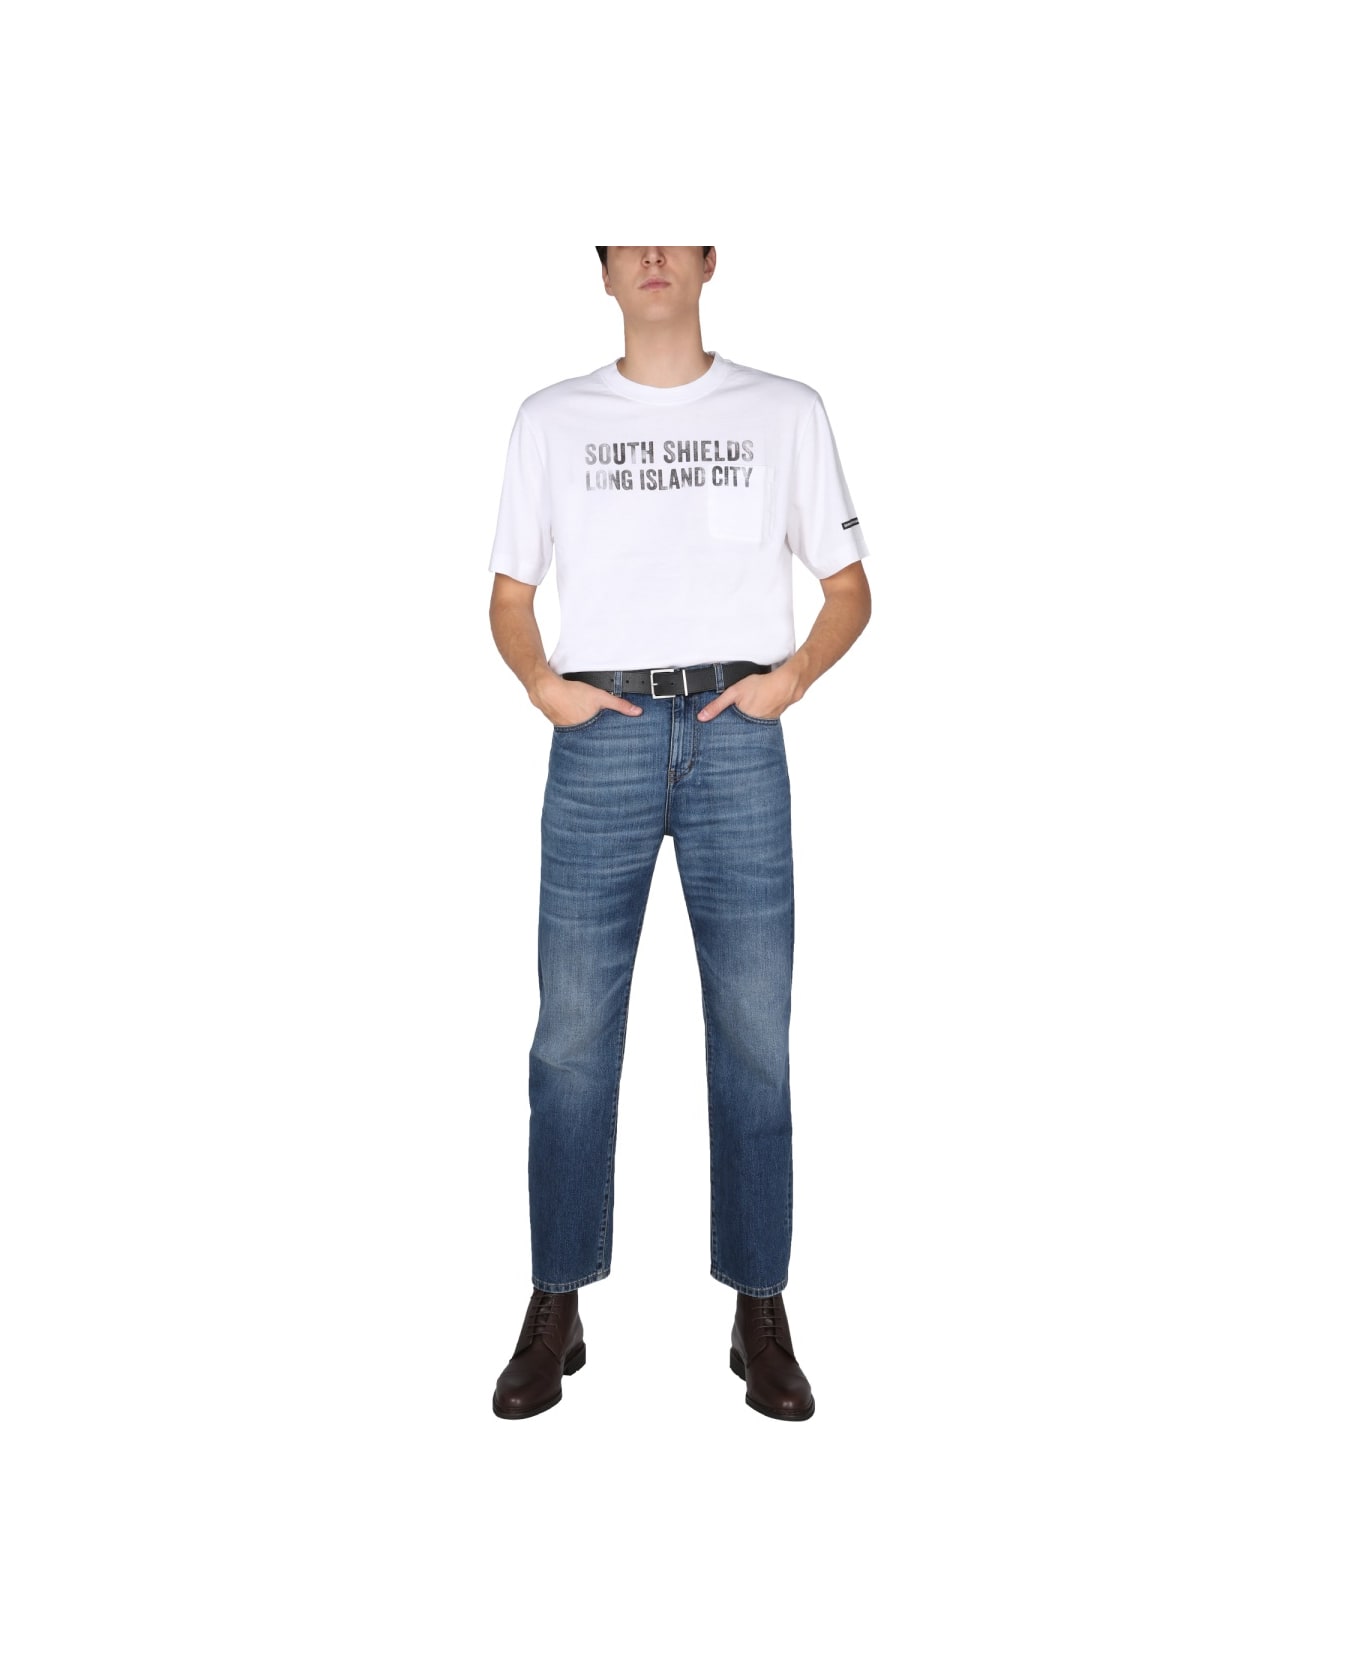 Barbour X Engineered Garments T-shirt - WHITE